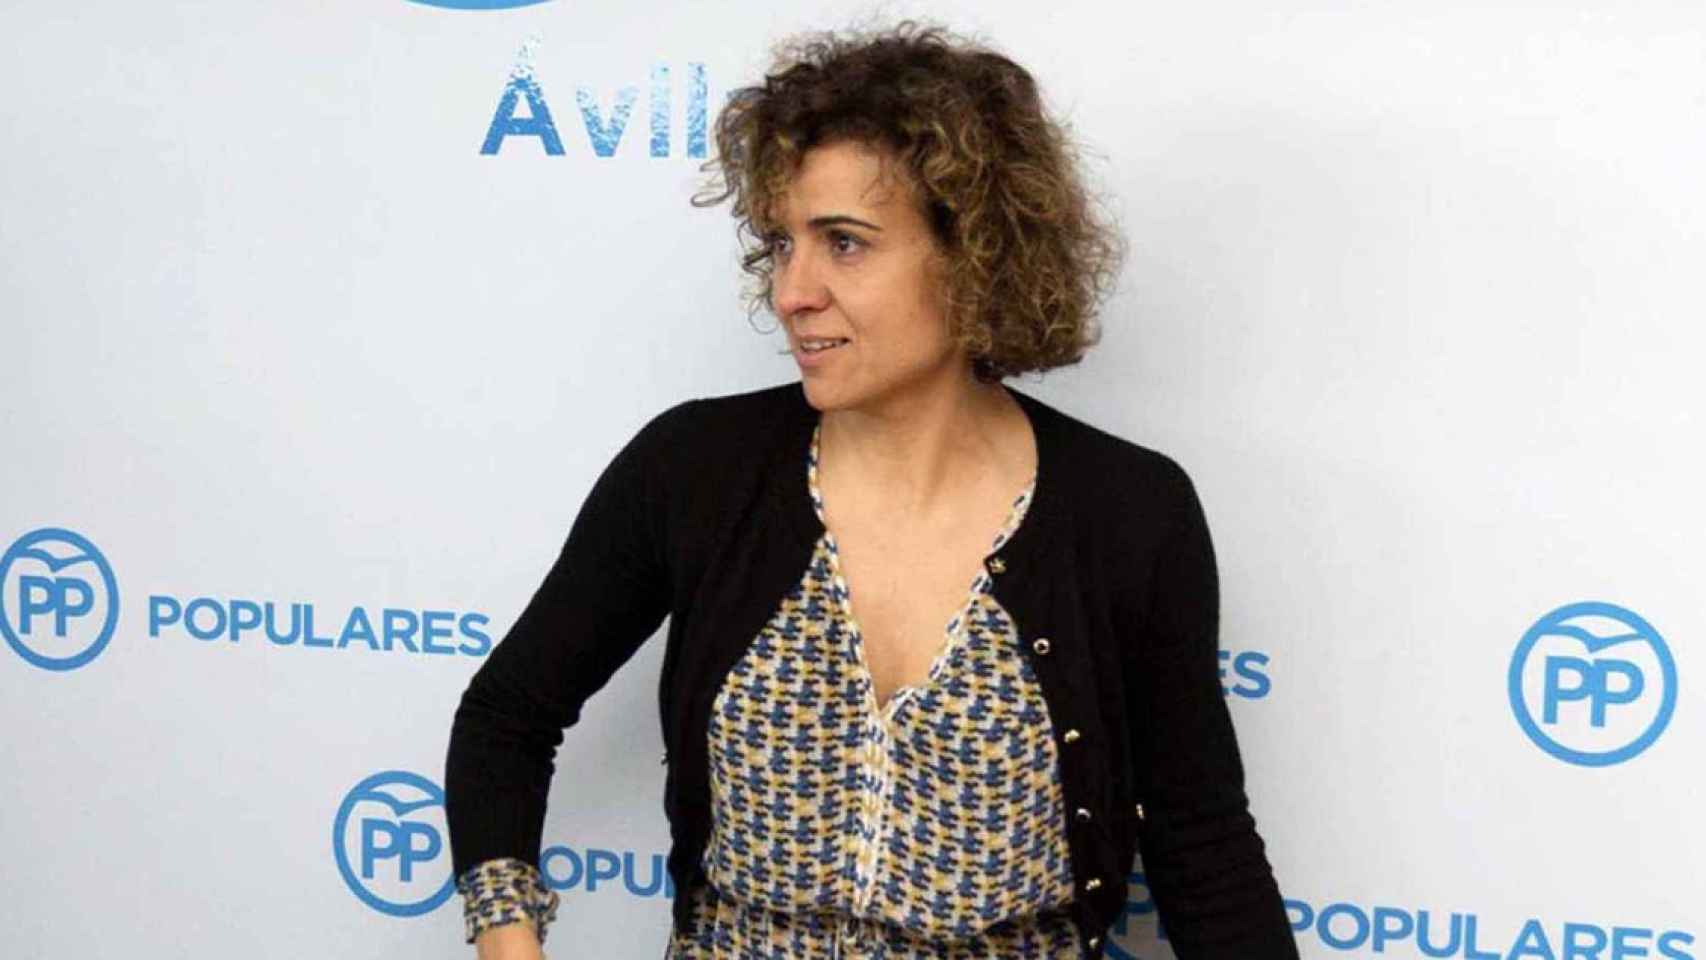 La eurodiputada del PP Dolors Montserrat, en una imagen de archivo